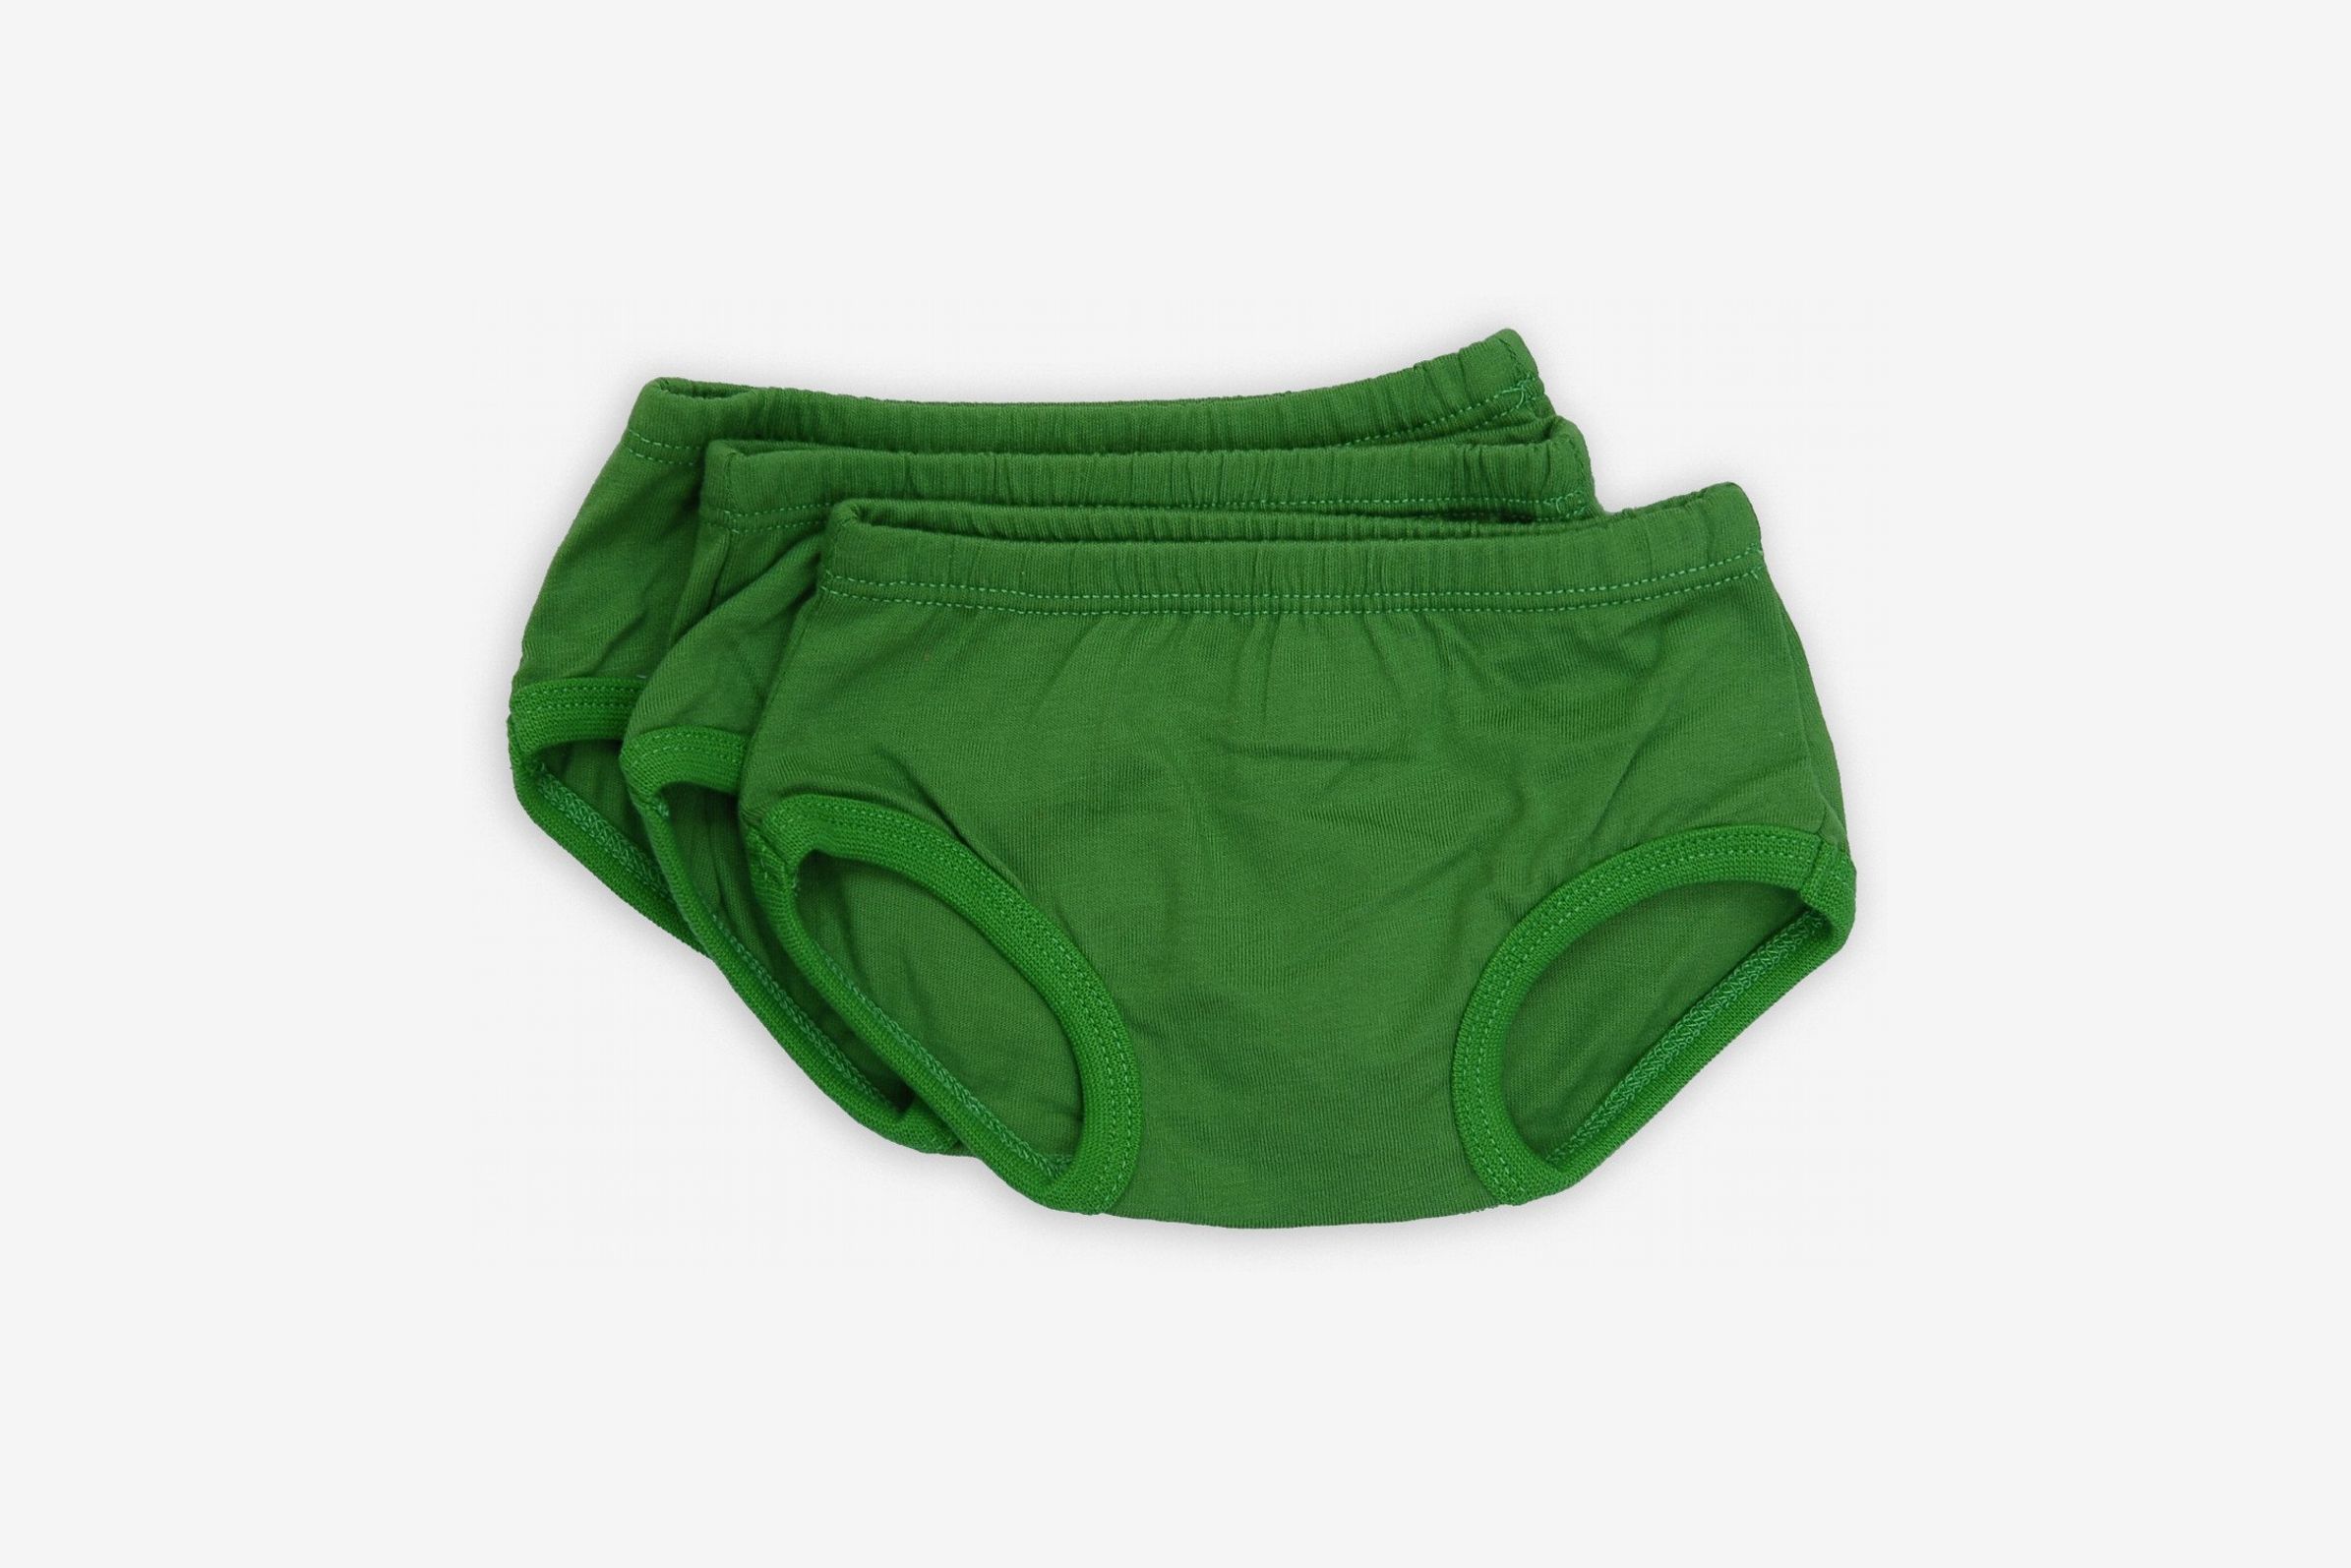 None Branded Oiotuyi Boys Boxer Underwear Briefs Toddler Kids Undies Boy Shorts Underpant for 3-9 Years 